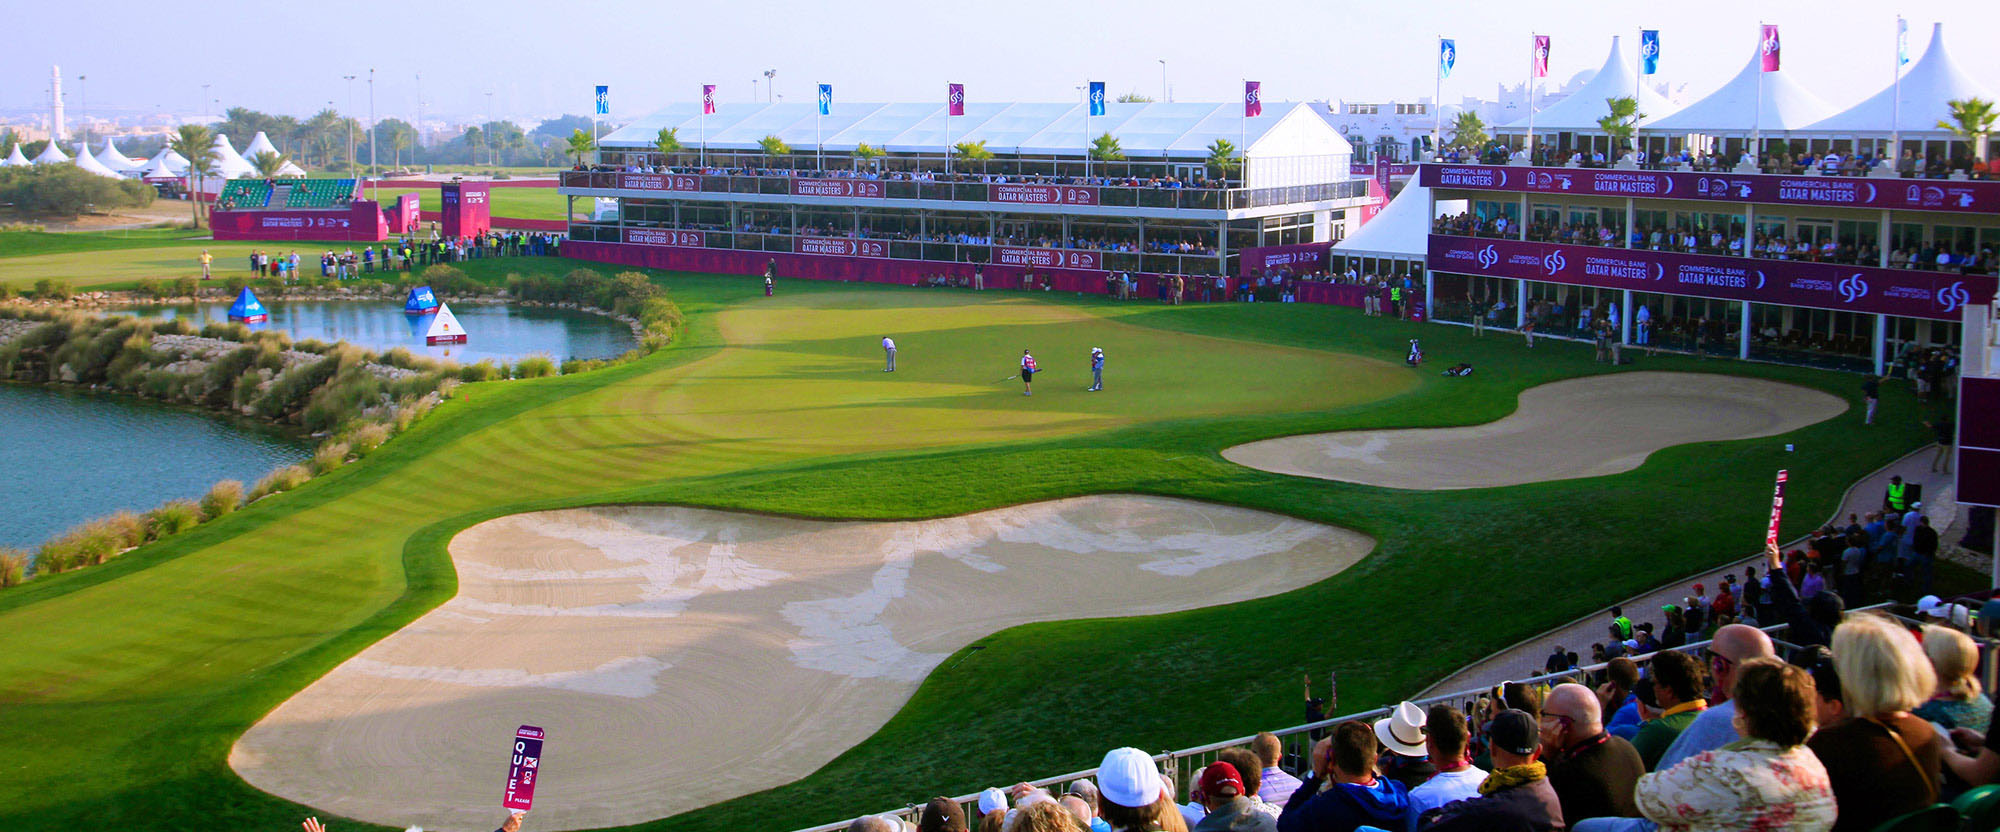 Qatar Masters FAM Trip 21st 26th March 2022, Doha Golf Tourism Network